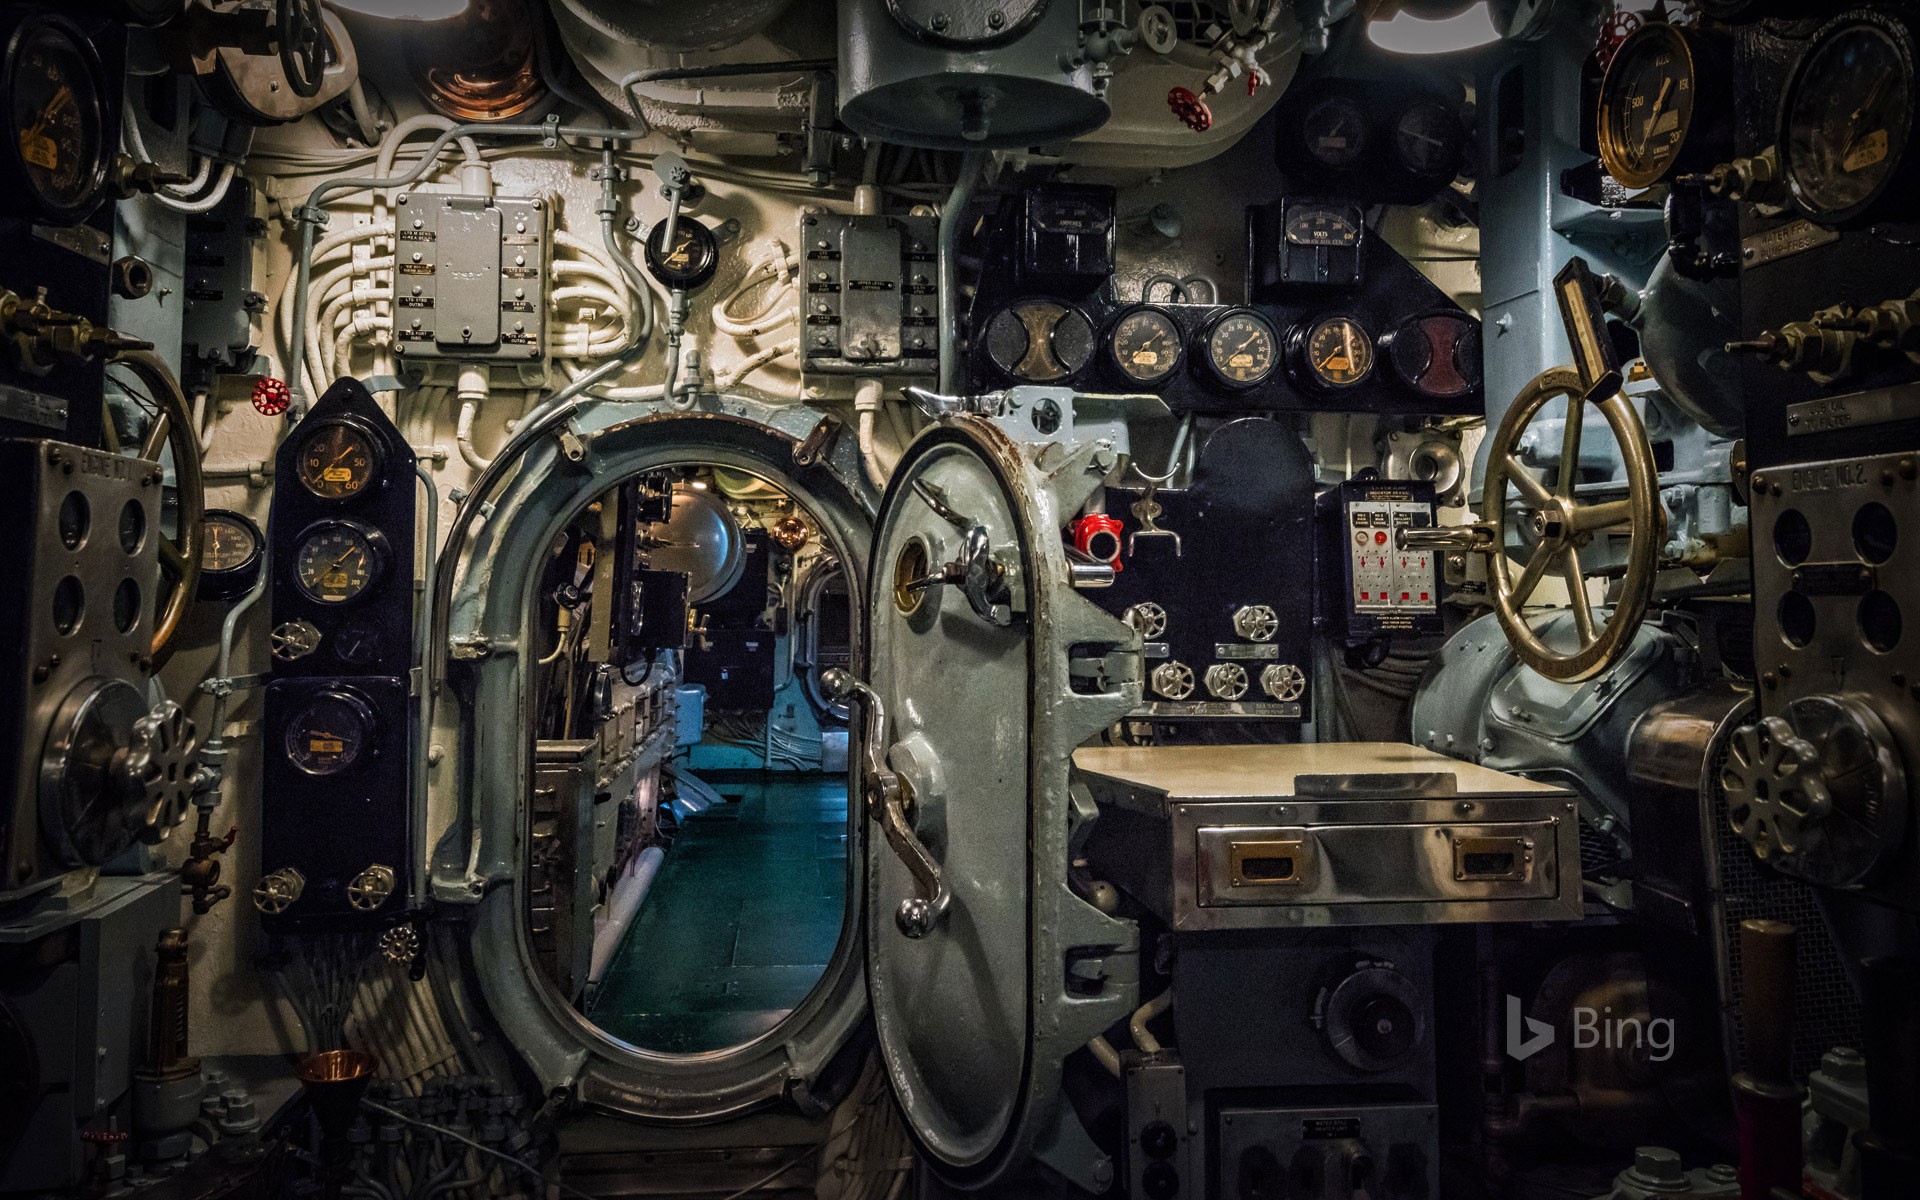 Forward engine room of the USS Drum, a Gato-class submarine at Battleship Memorial Park, Mobile, Alabama